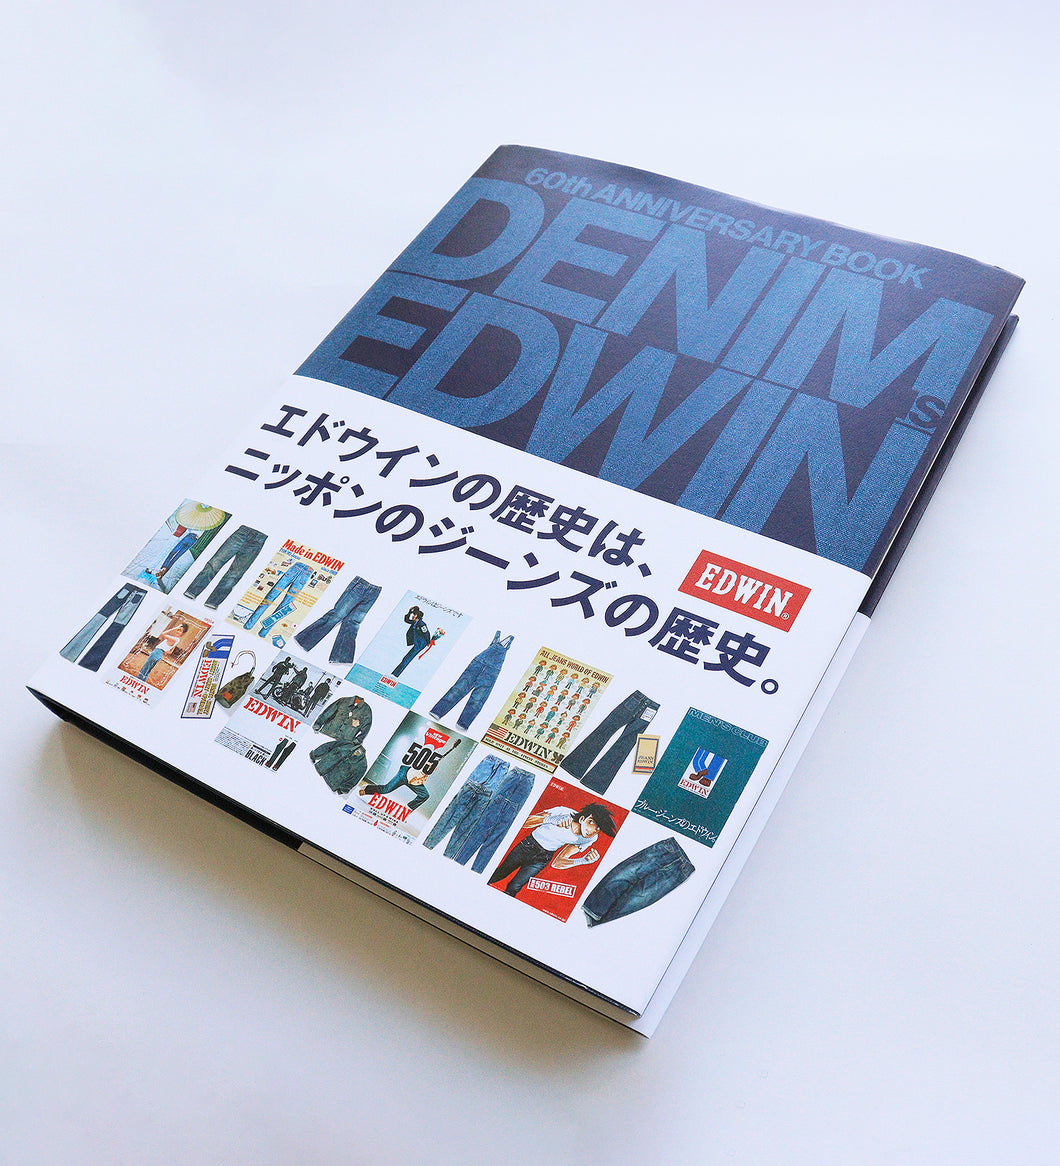 60th Anniversary Book 【DENIM IS EDWIN】